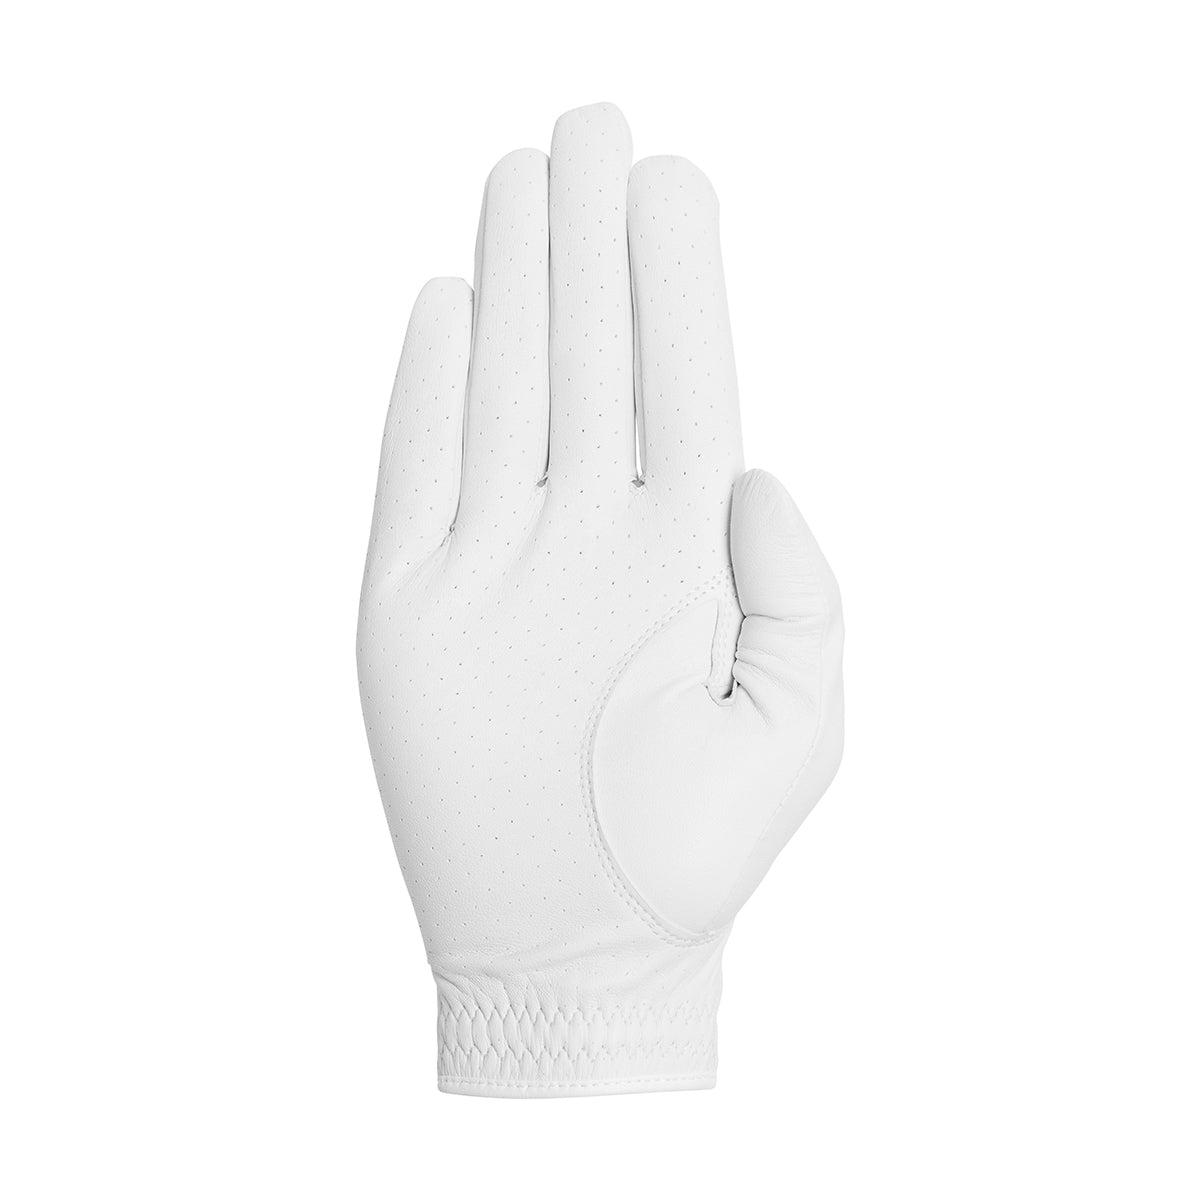 Men's Hybrid Pro Brompton White / Navy / Red Golf Glove - Right